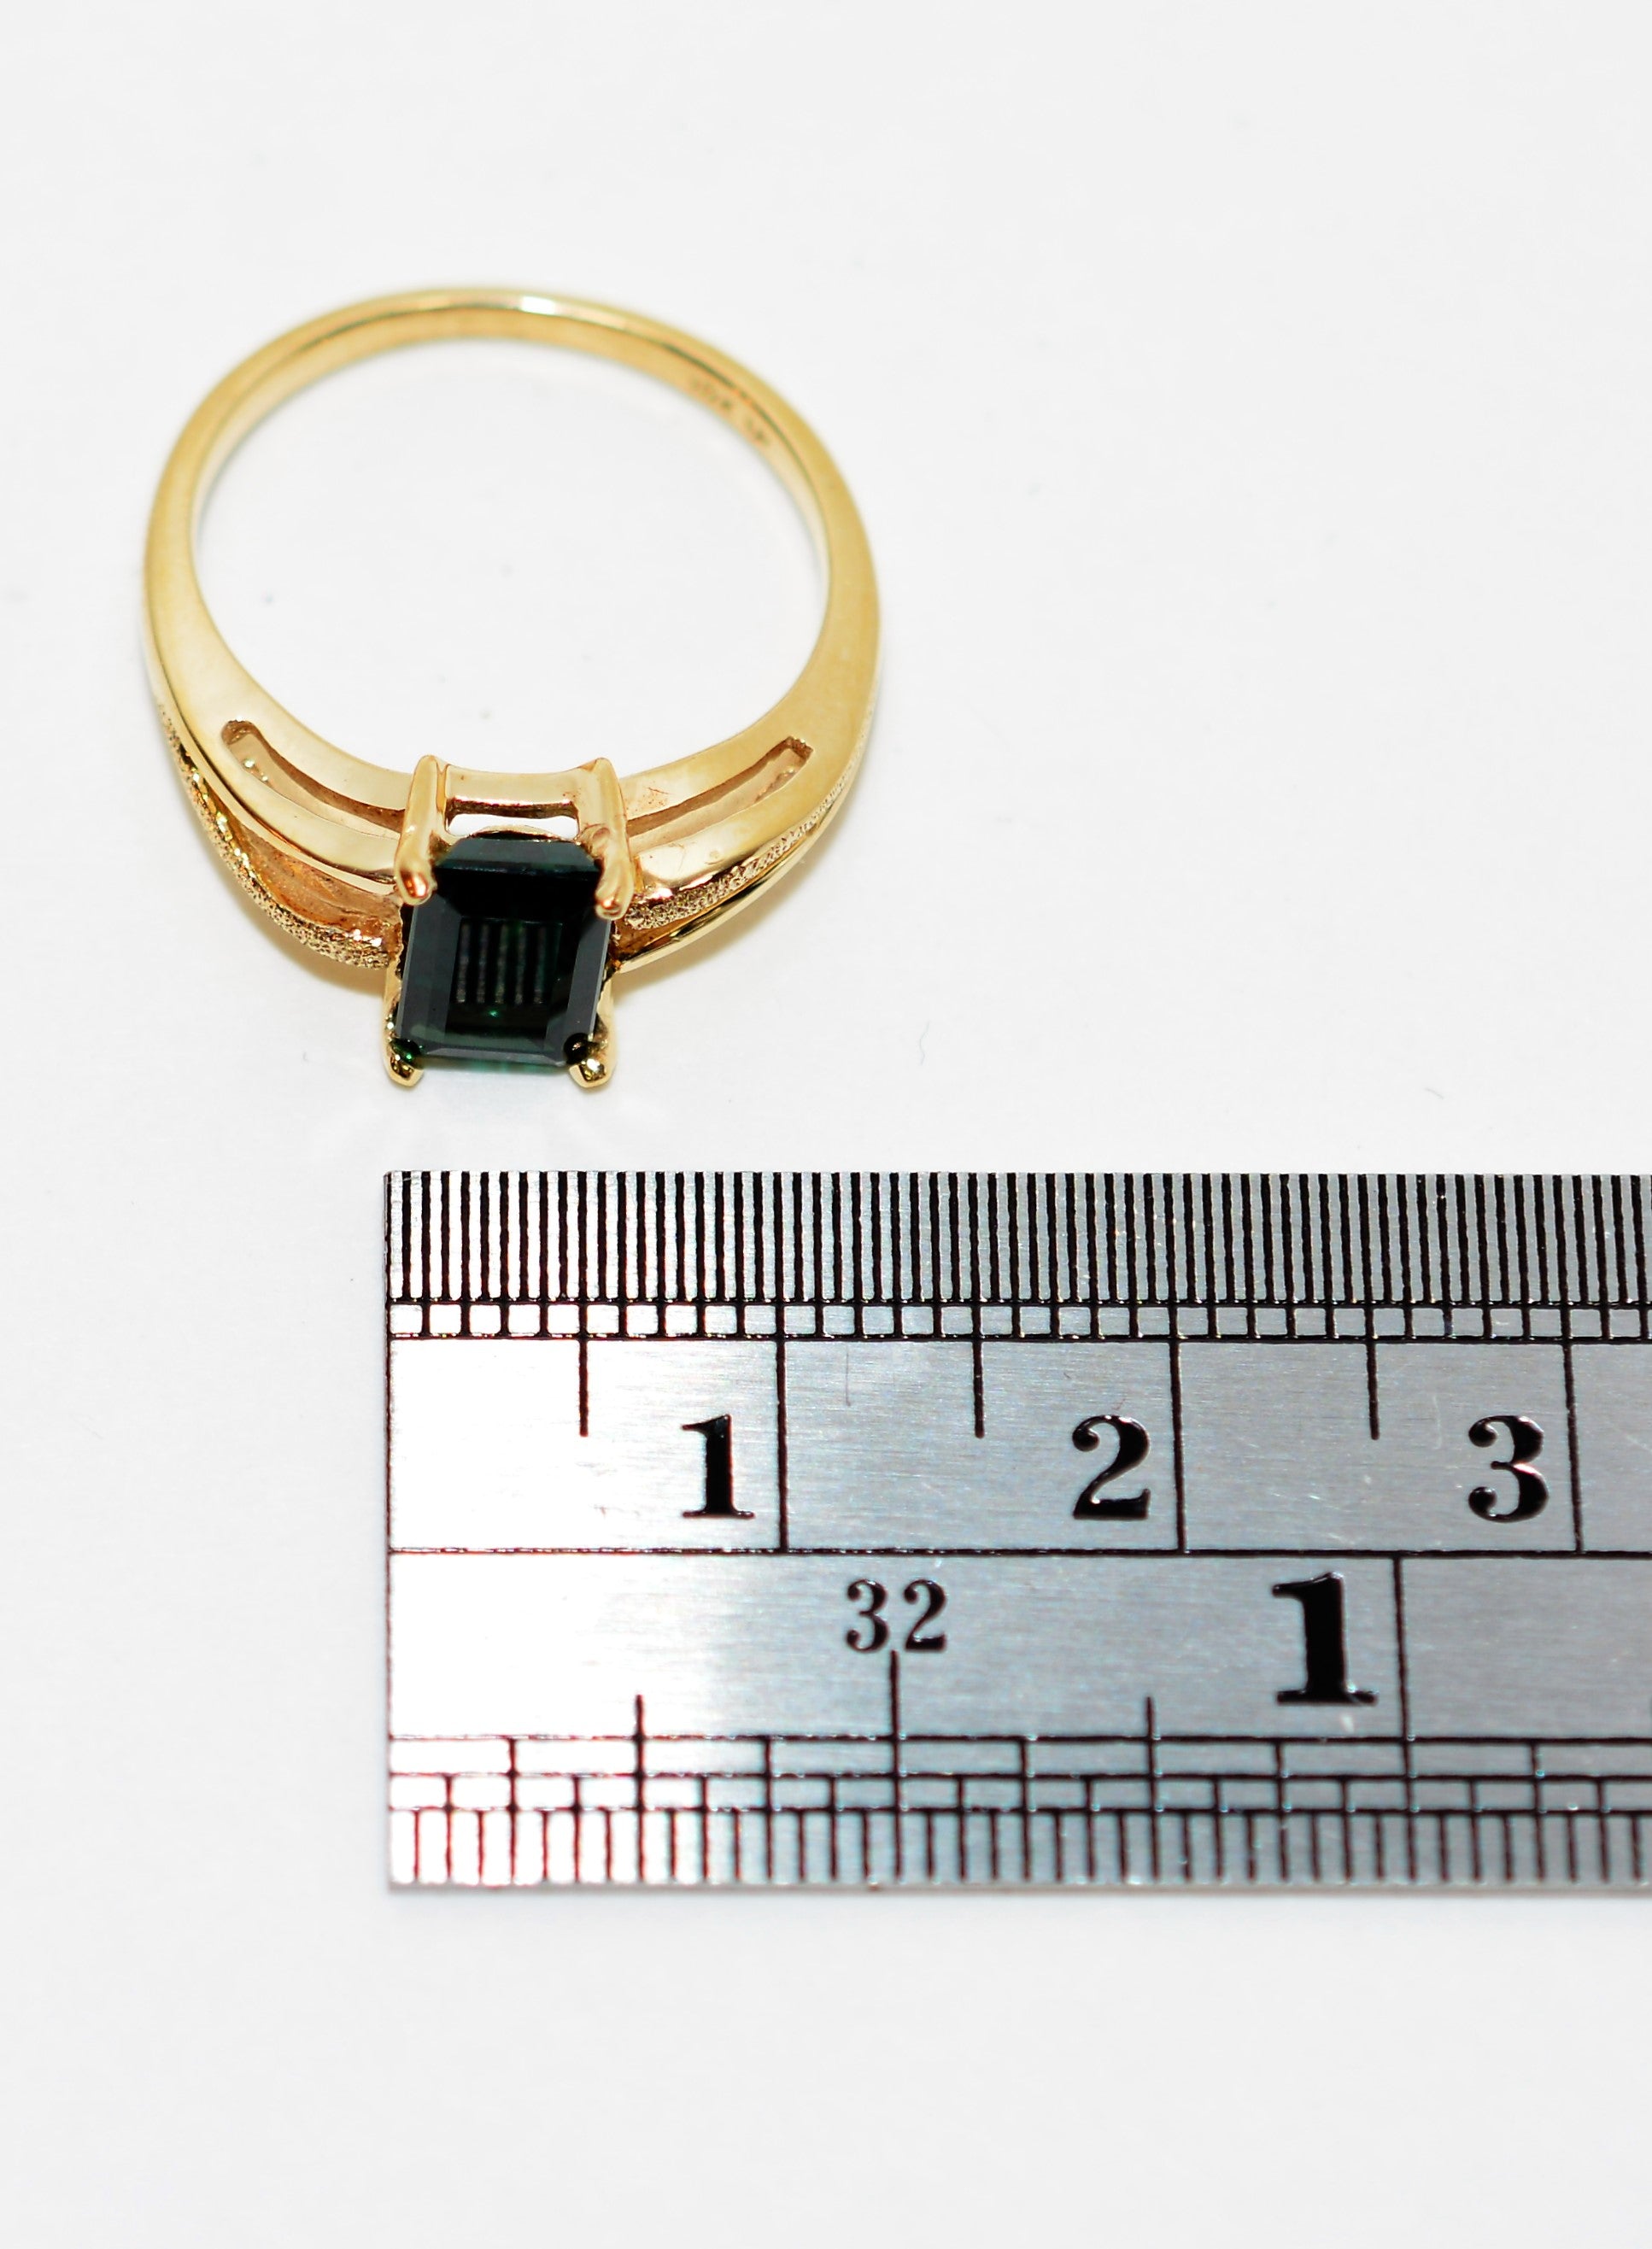 Natural Indicolite Tourmaline Ring 10K Solid Gold 1.24ct Solitaire Ring Gemstone Ring Womens Ring Ladies Ring Statement Ring Engagement Ring